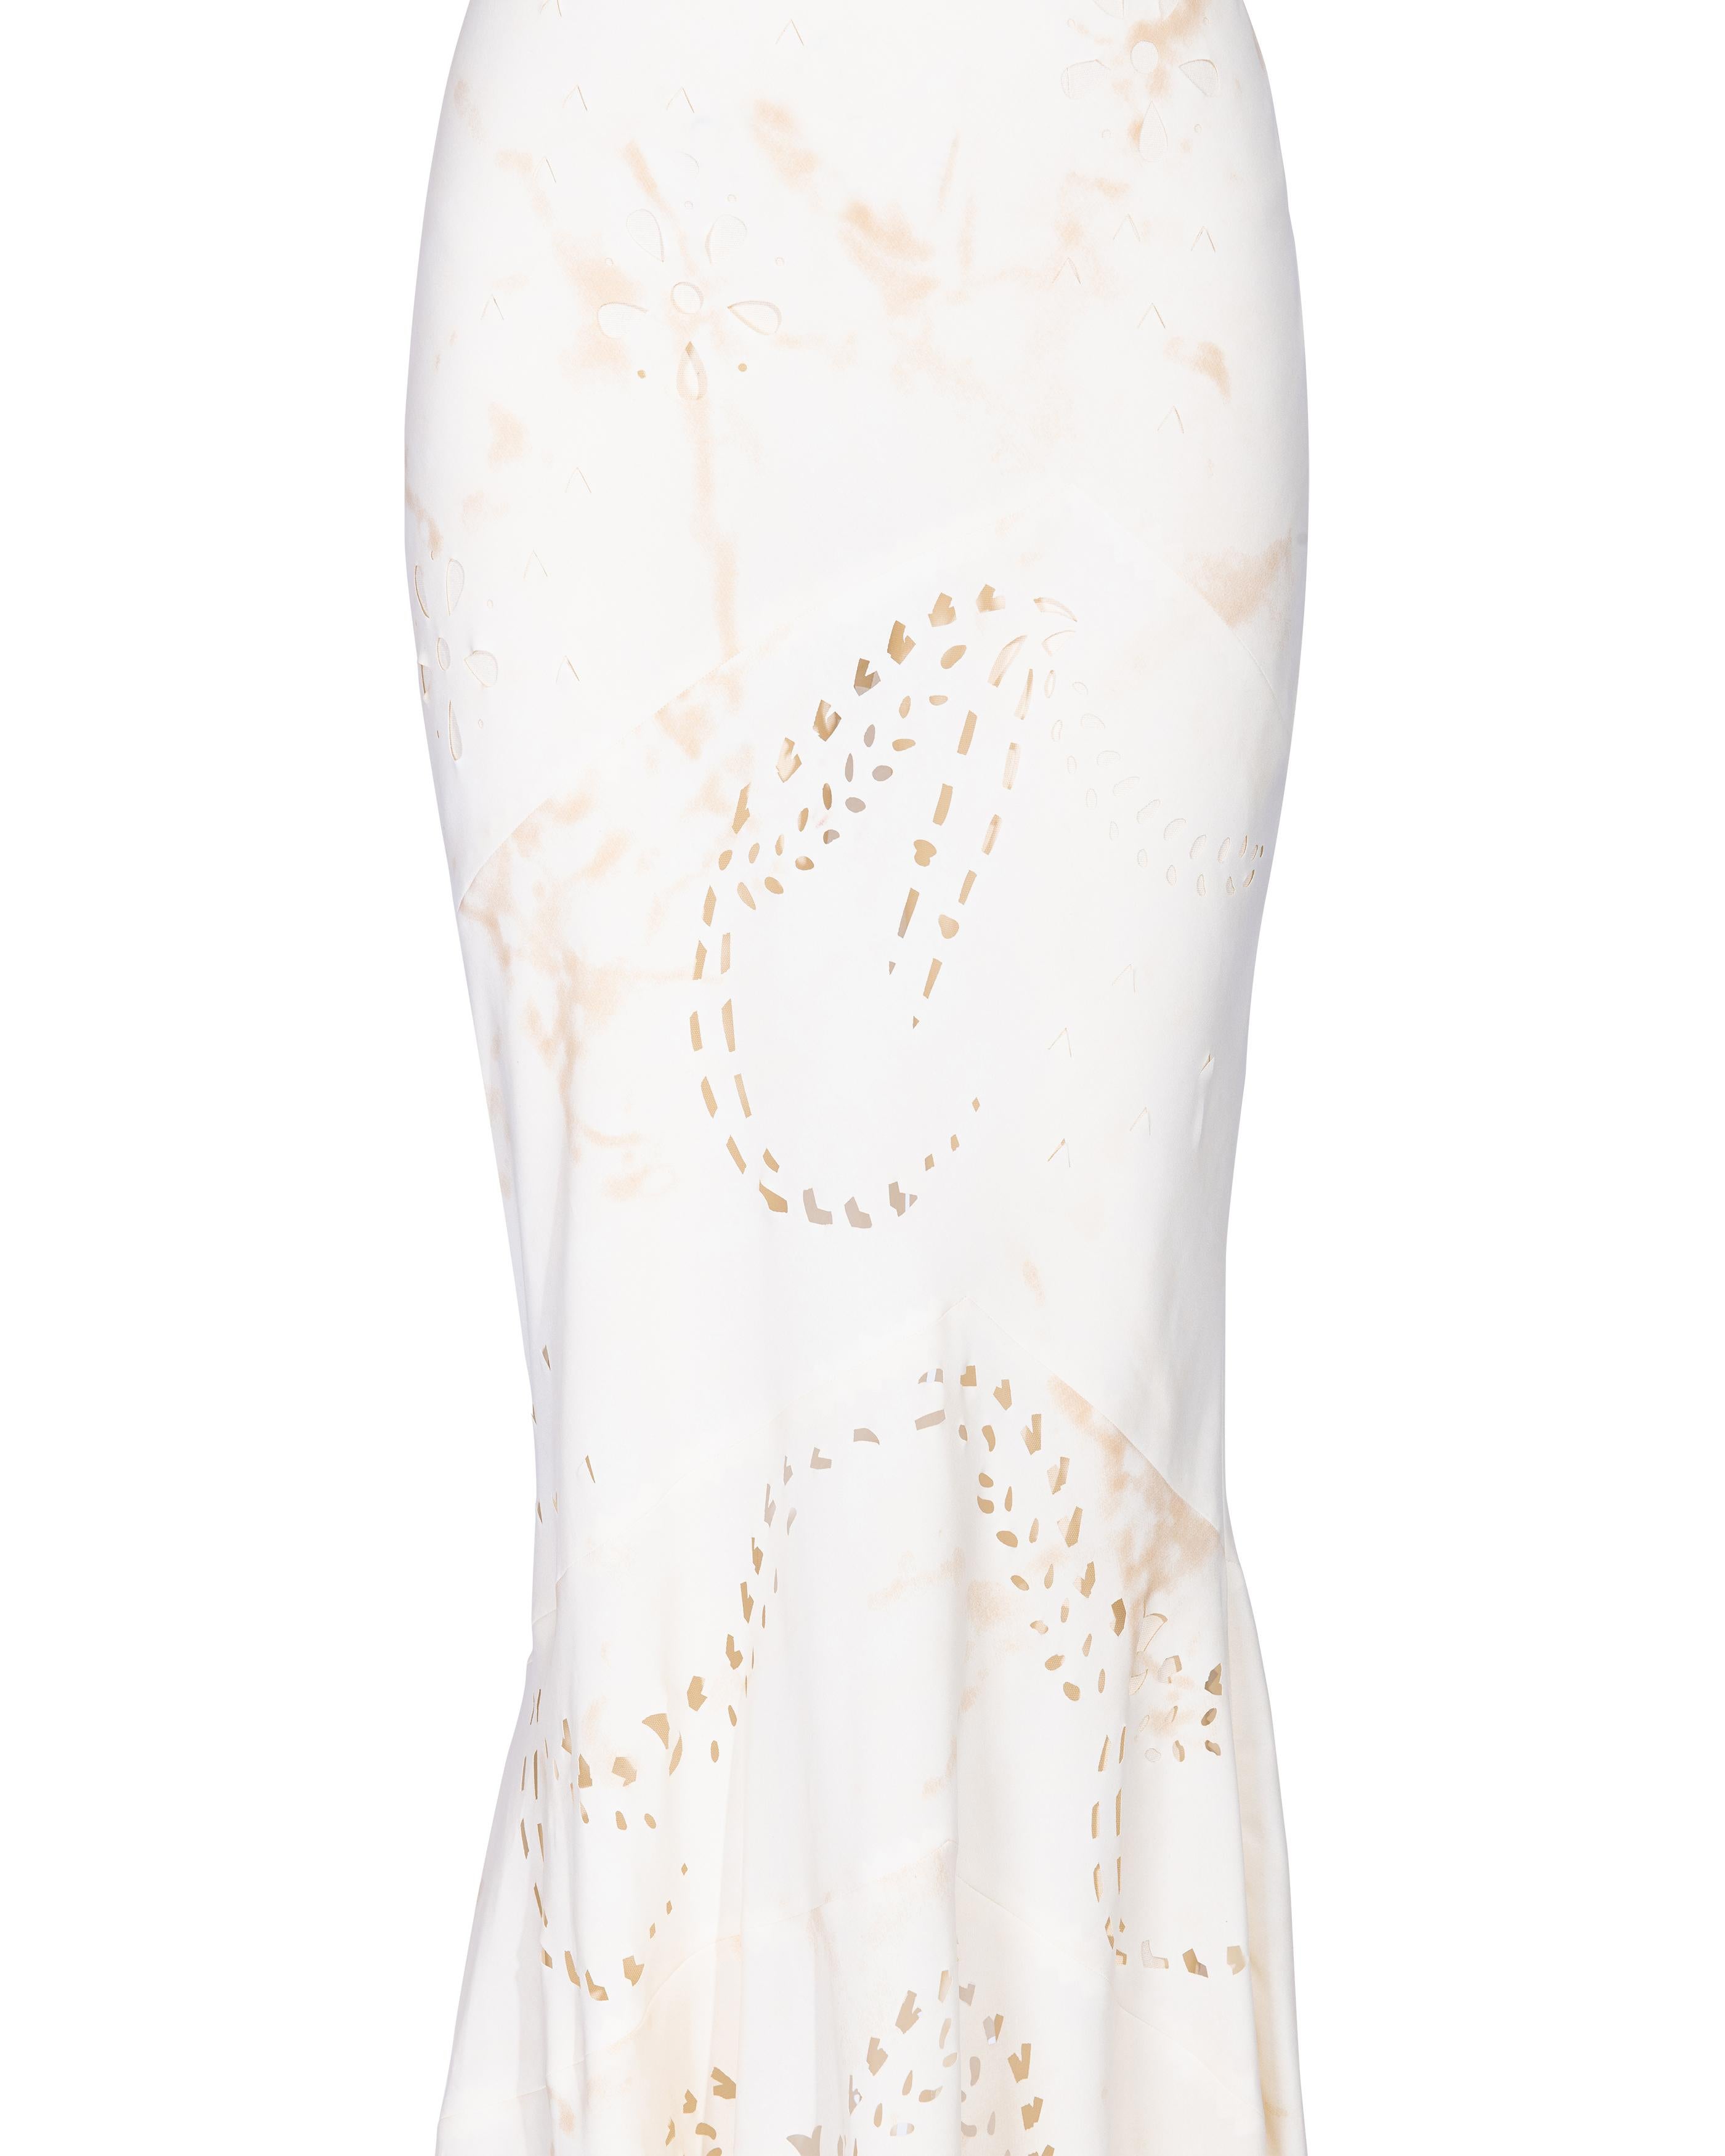 A/W 2001 John Galliano Bias Cut Cream Gown with Lasercut Floral Details 2